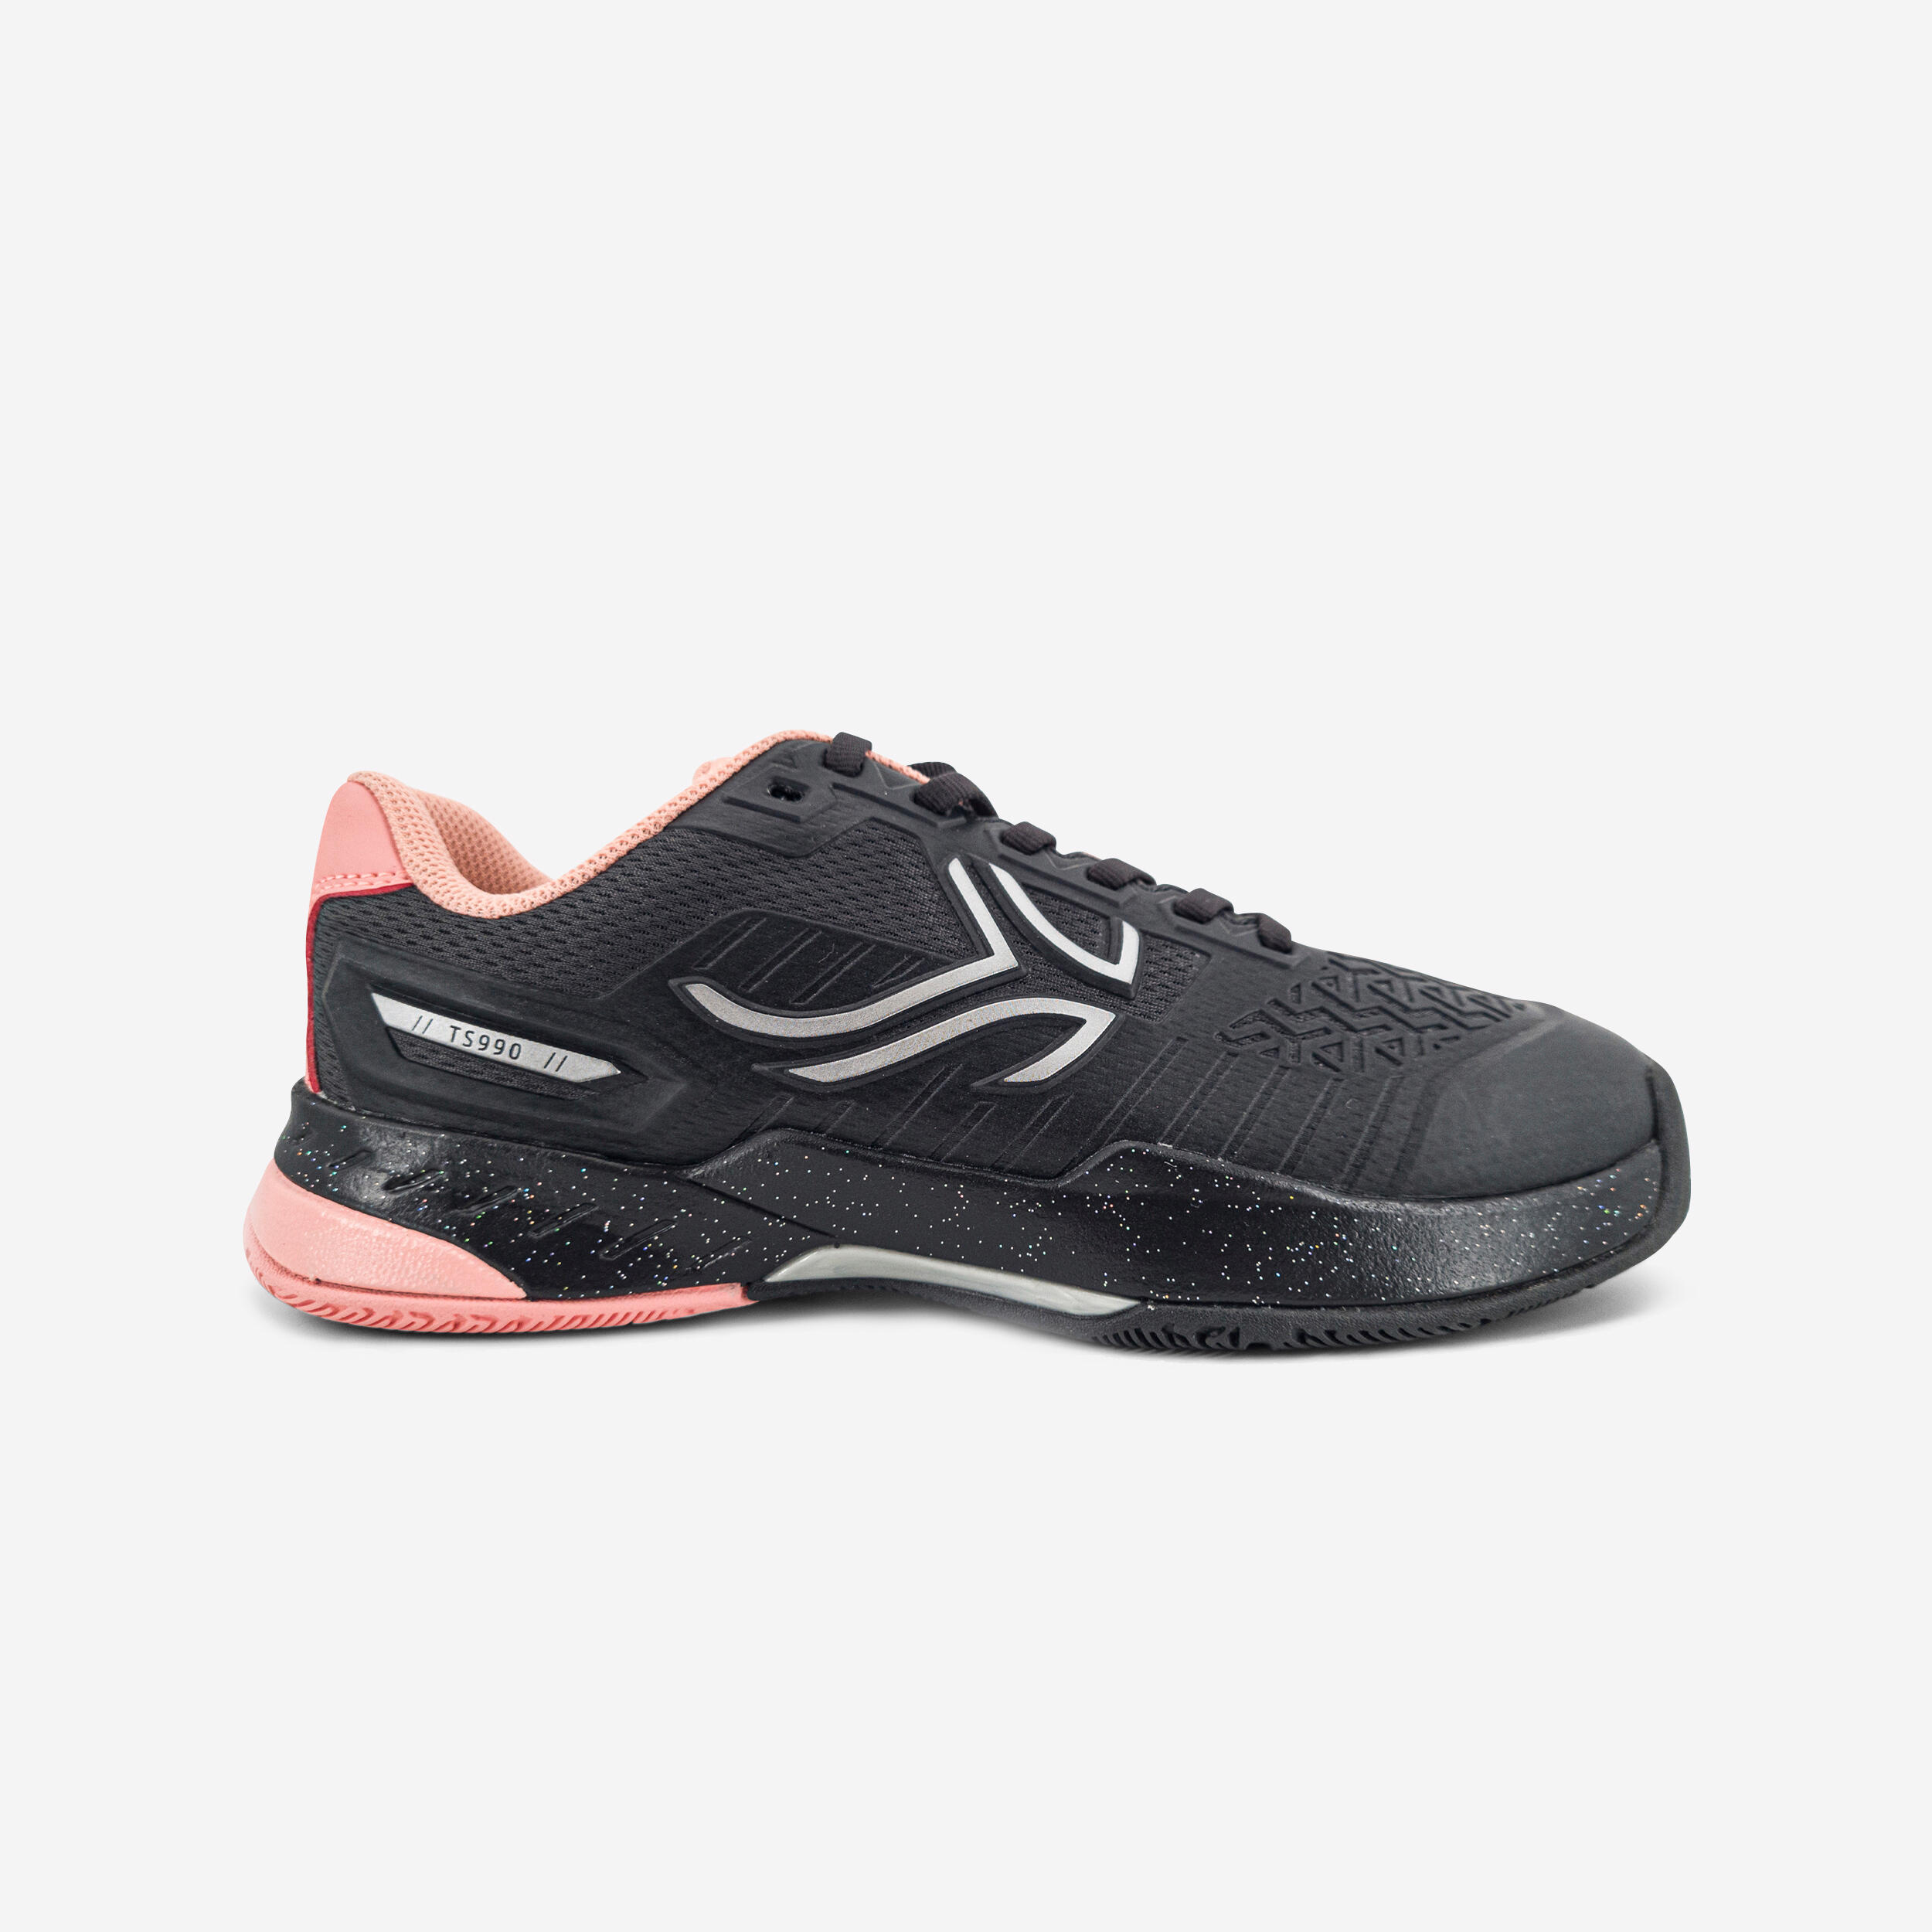 Kids' Tennis Shoes TS990 JR - Black Sparkles 1/7